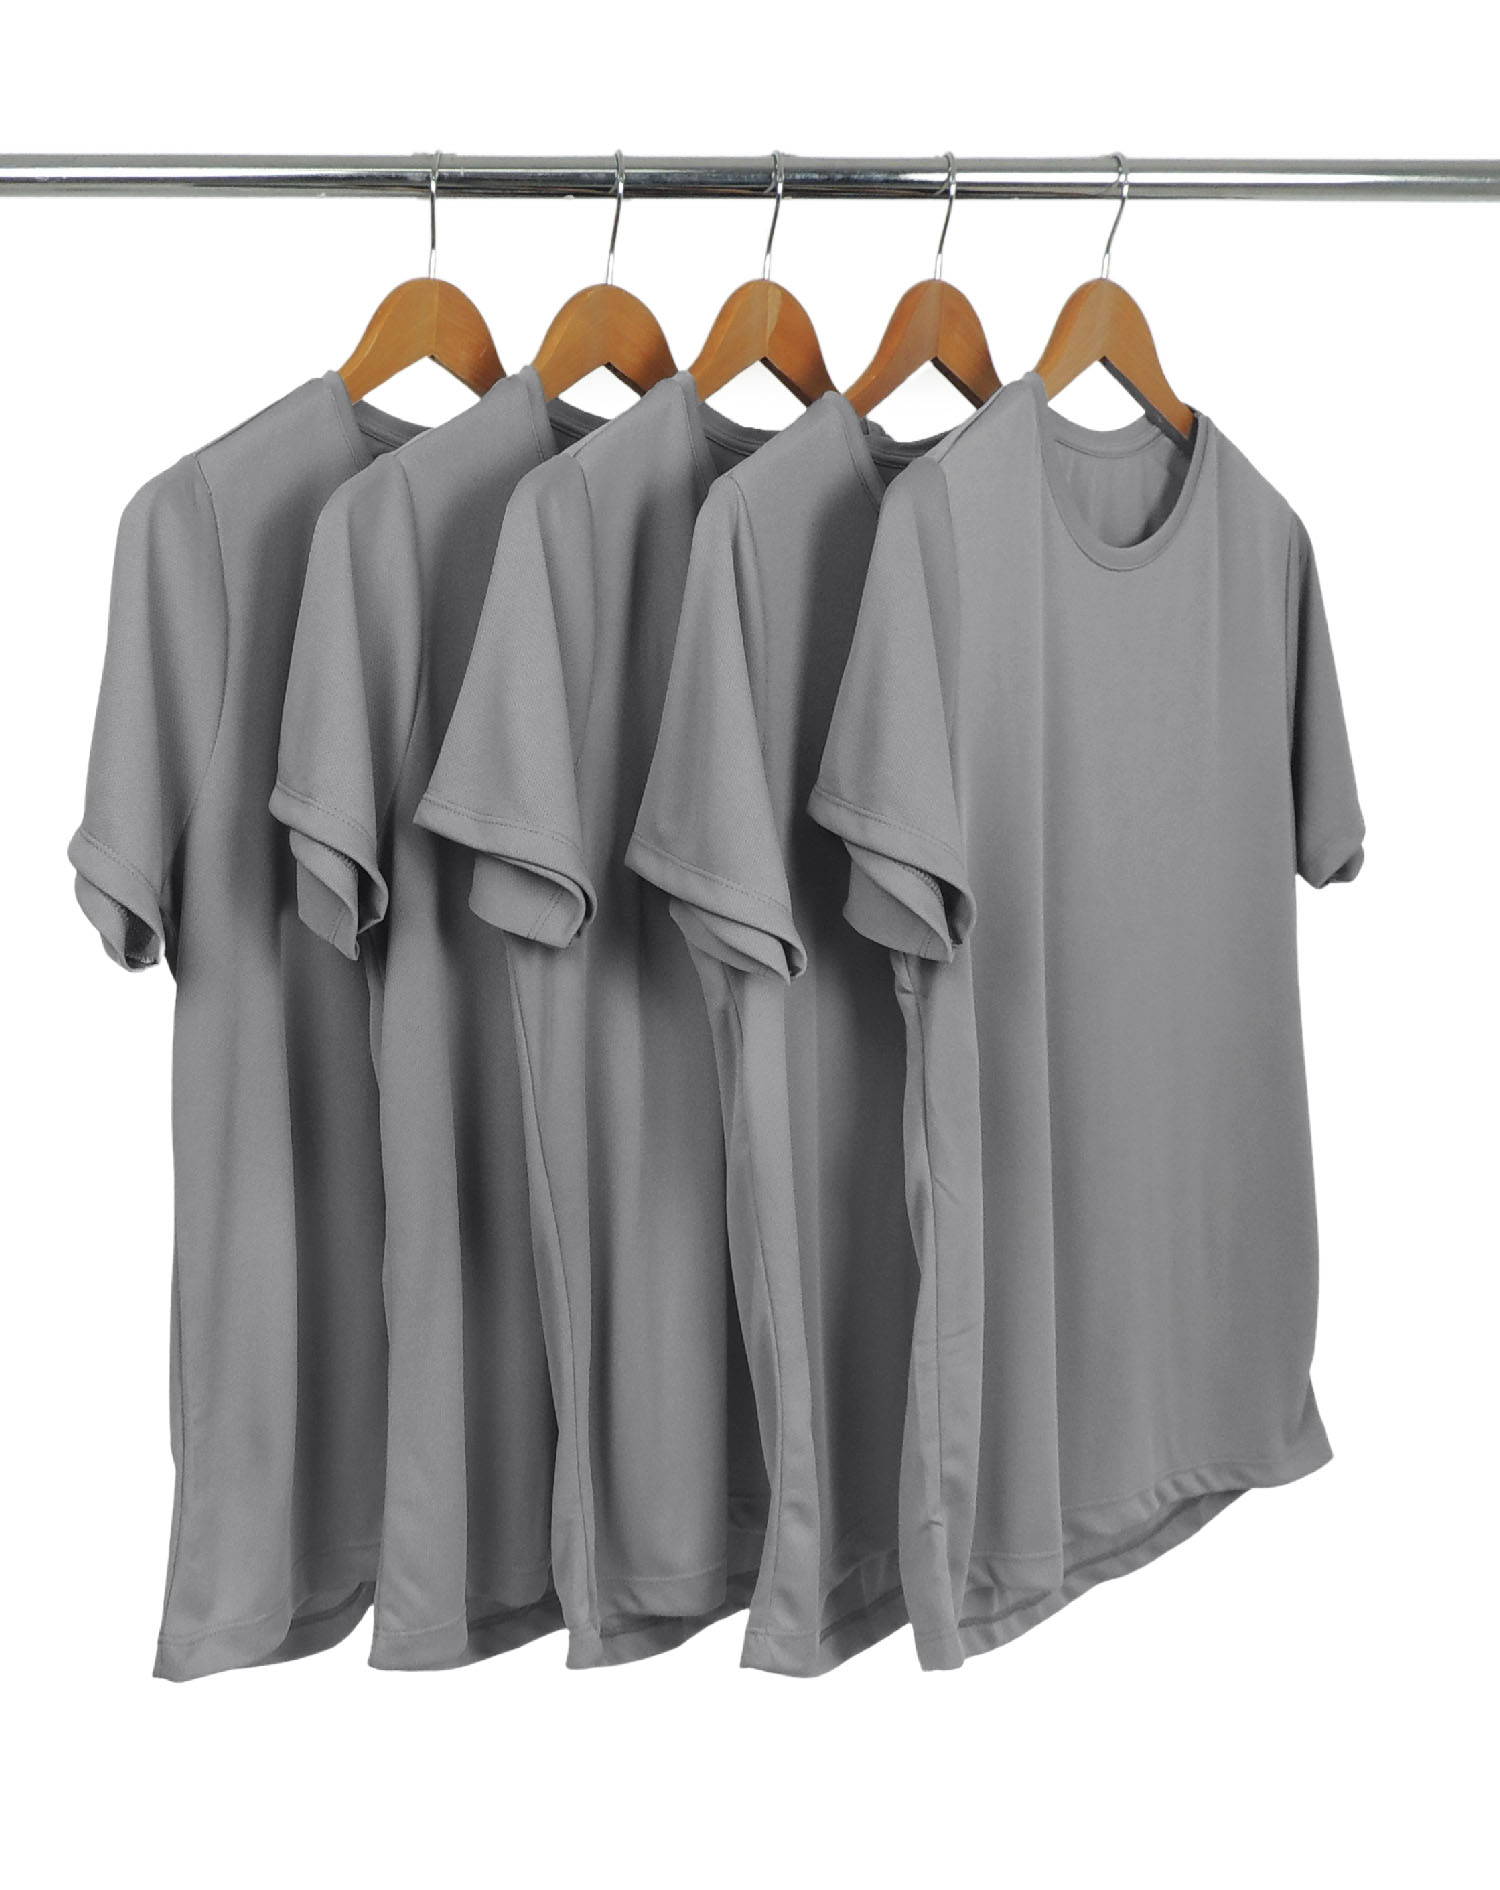 KIT 5 Camisetas Dry Fit Cinza Chumbo Proteção UV 30+